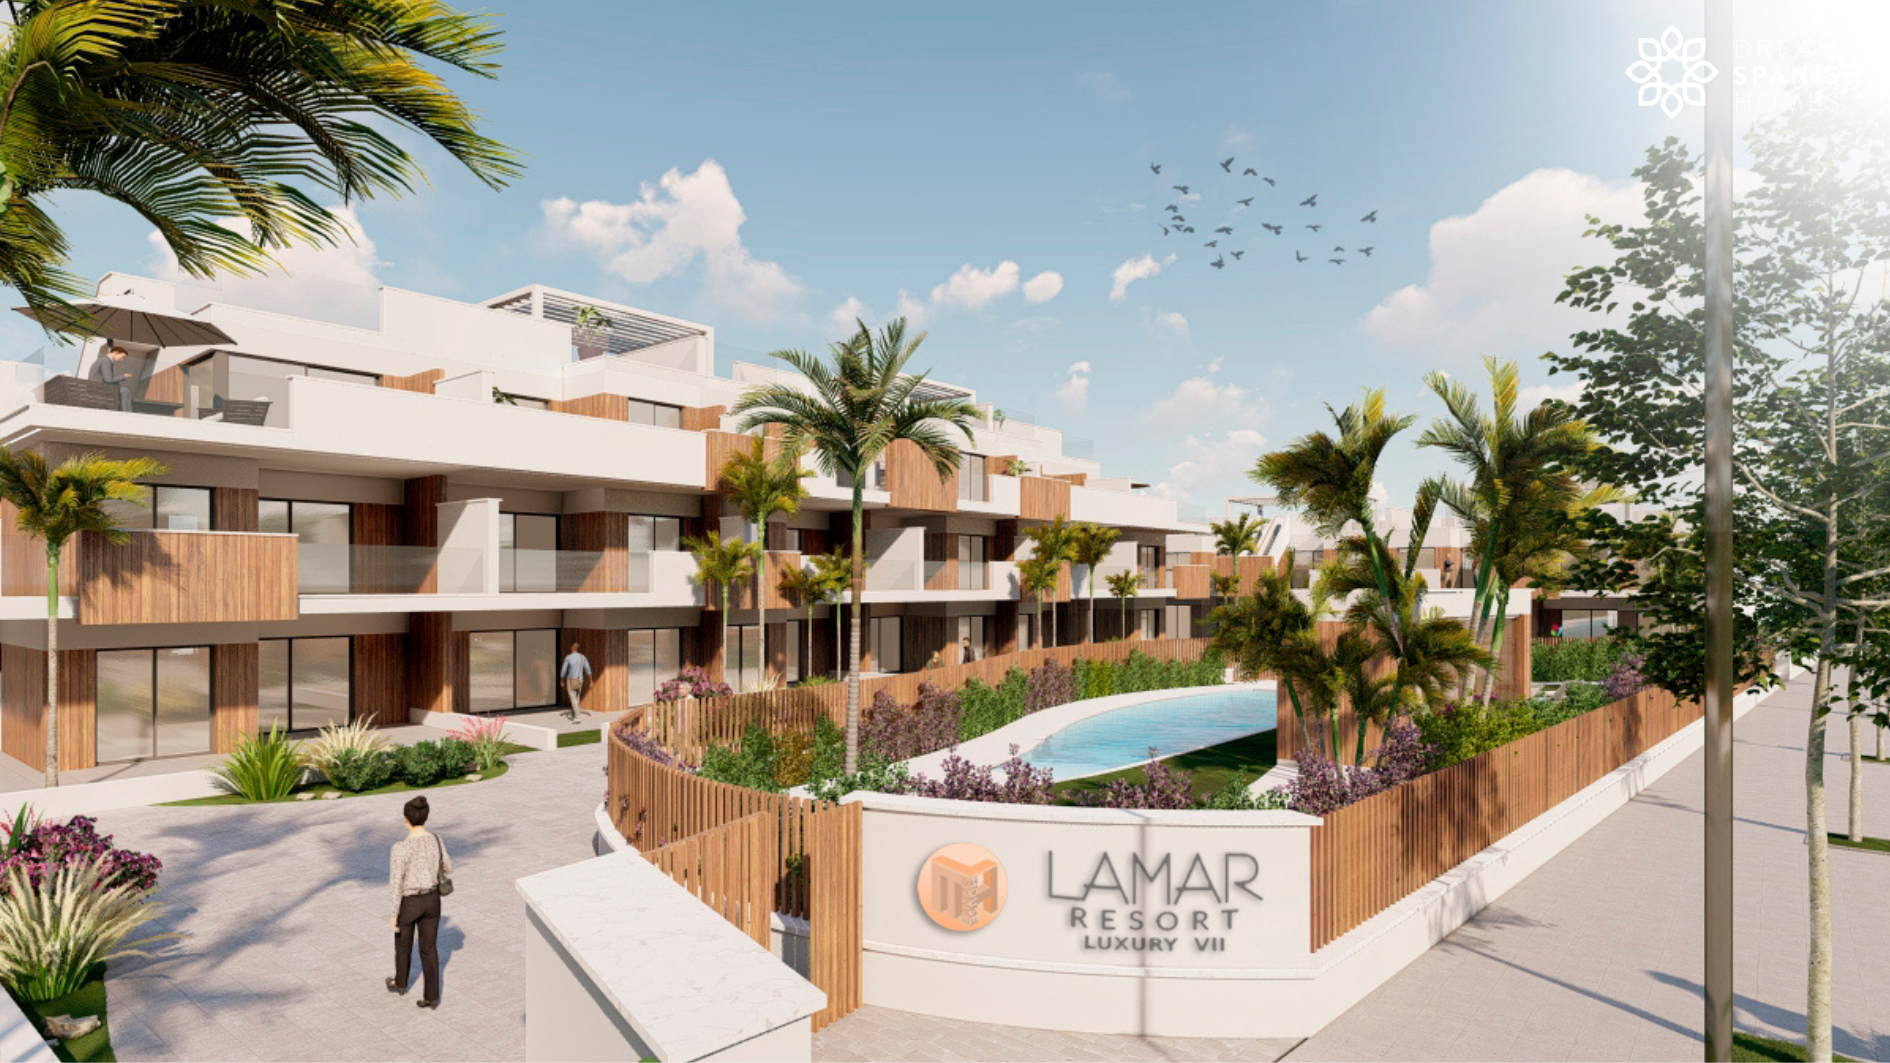 2 – 3 Bedroom Bungalows and Apartments, Lamar Resort Luxury VII